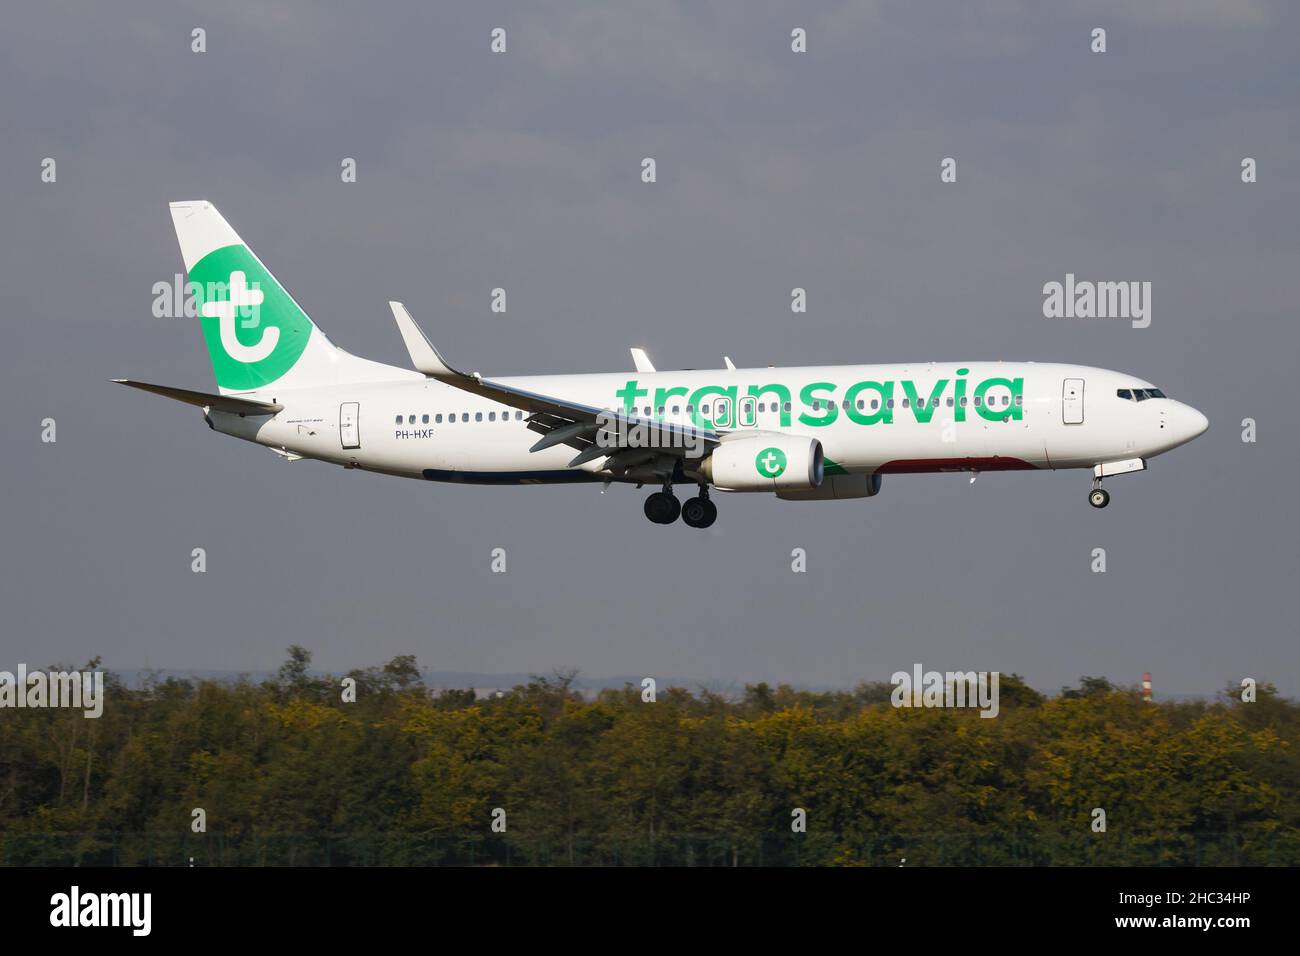 Budapest / Hungary - October 7, 2018: Transavia Boeing 737-800 PH-HXF passenger plane arrival and landing at Budapest Airport Stock Photo